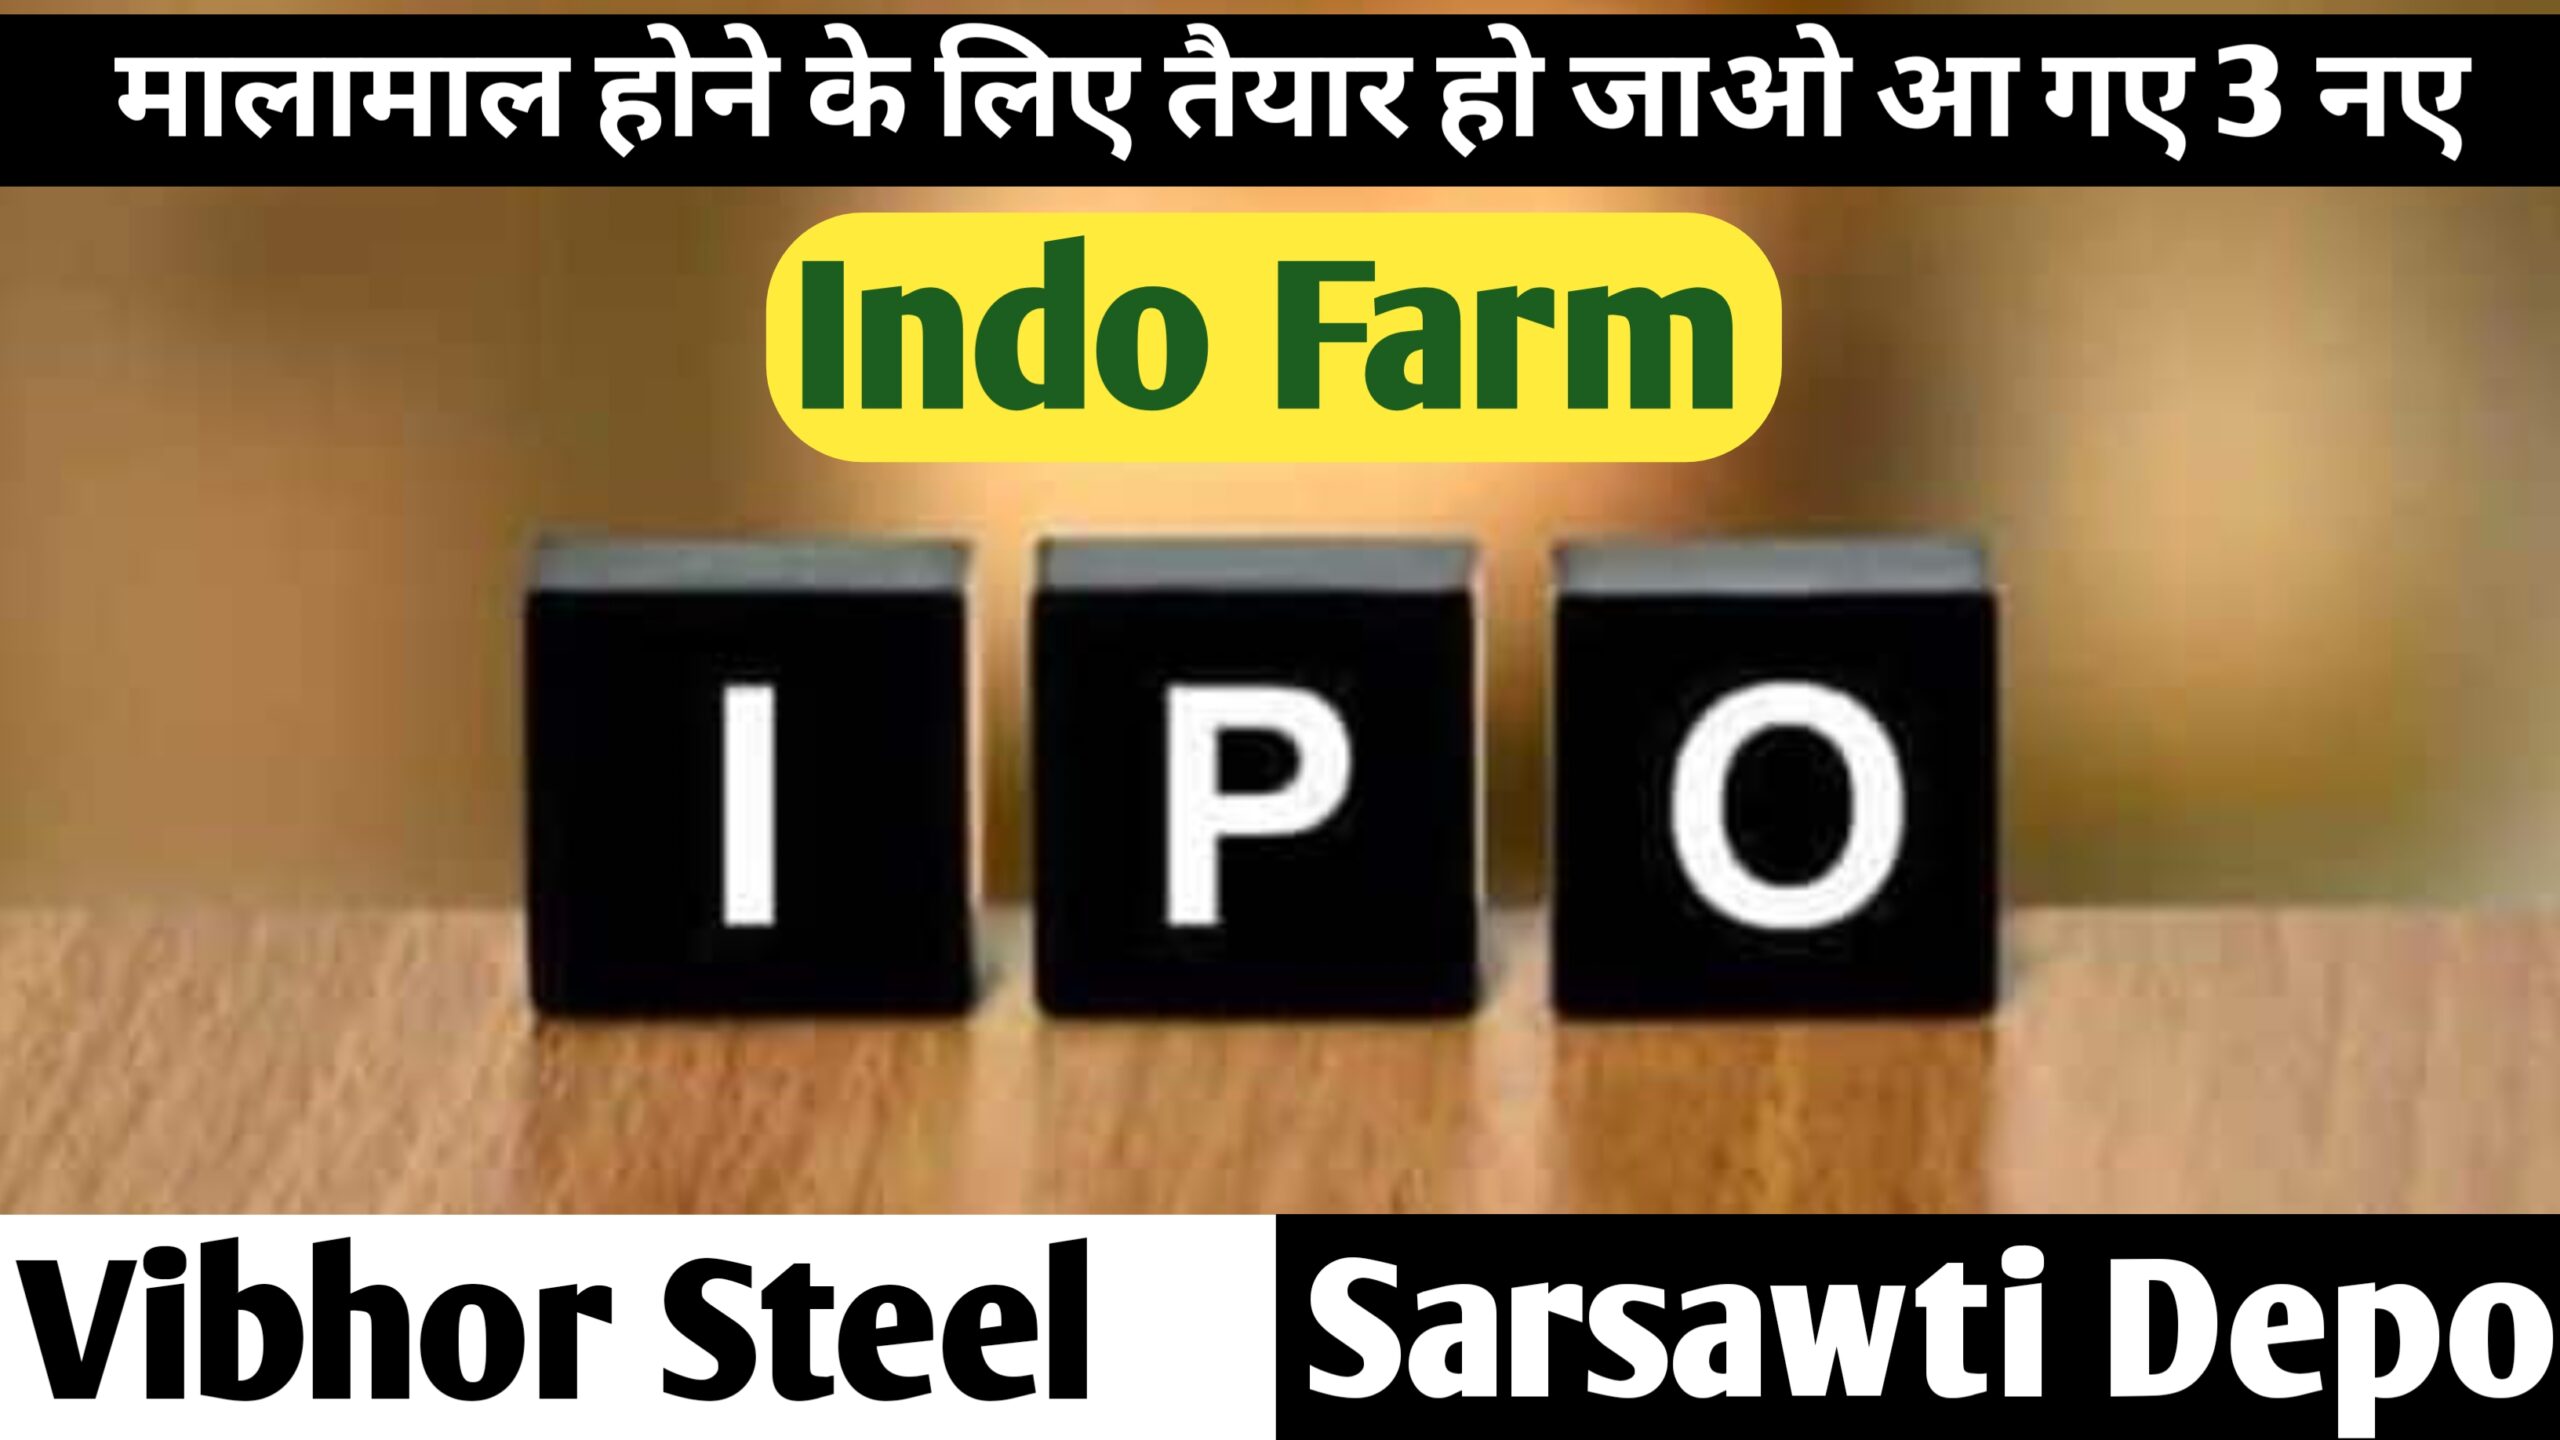 Indo Farm Equipment ,Vibhor Steel Limited, Sarsawti Depo Limited.